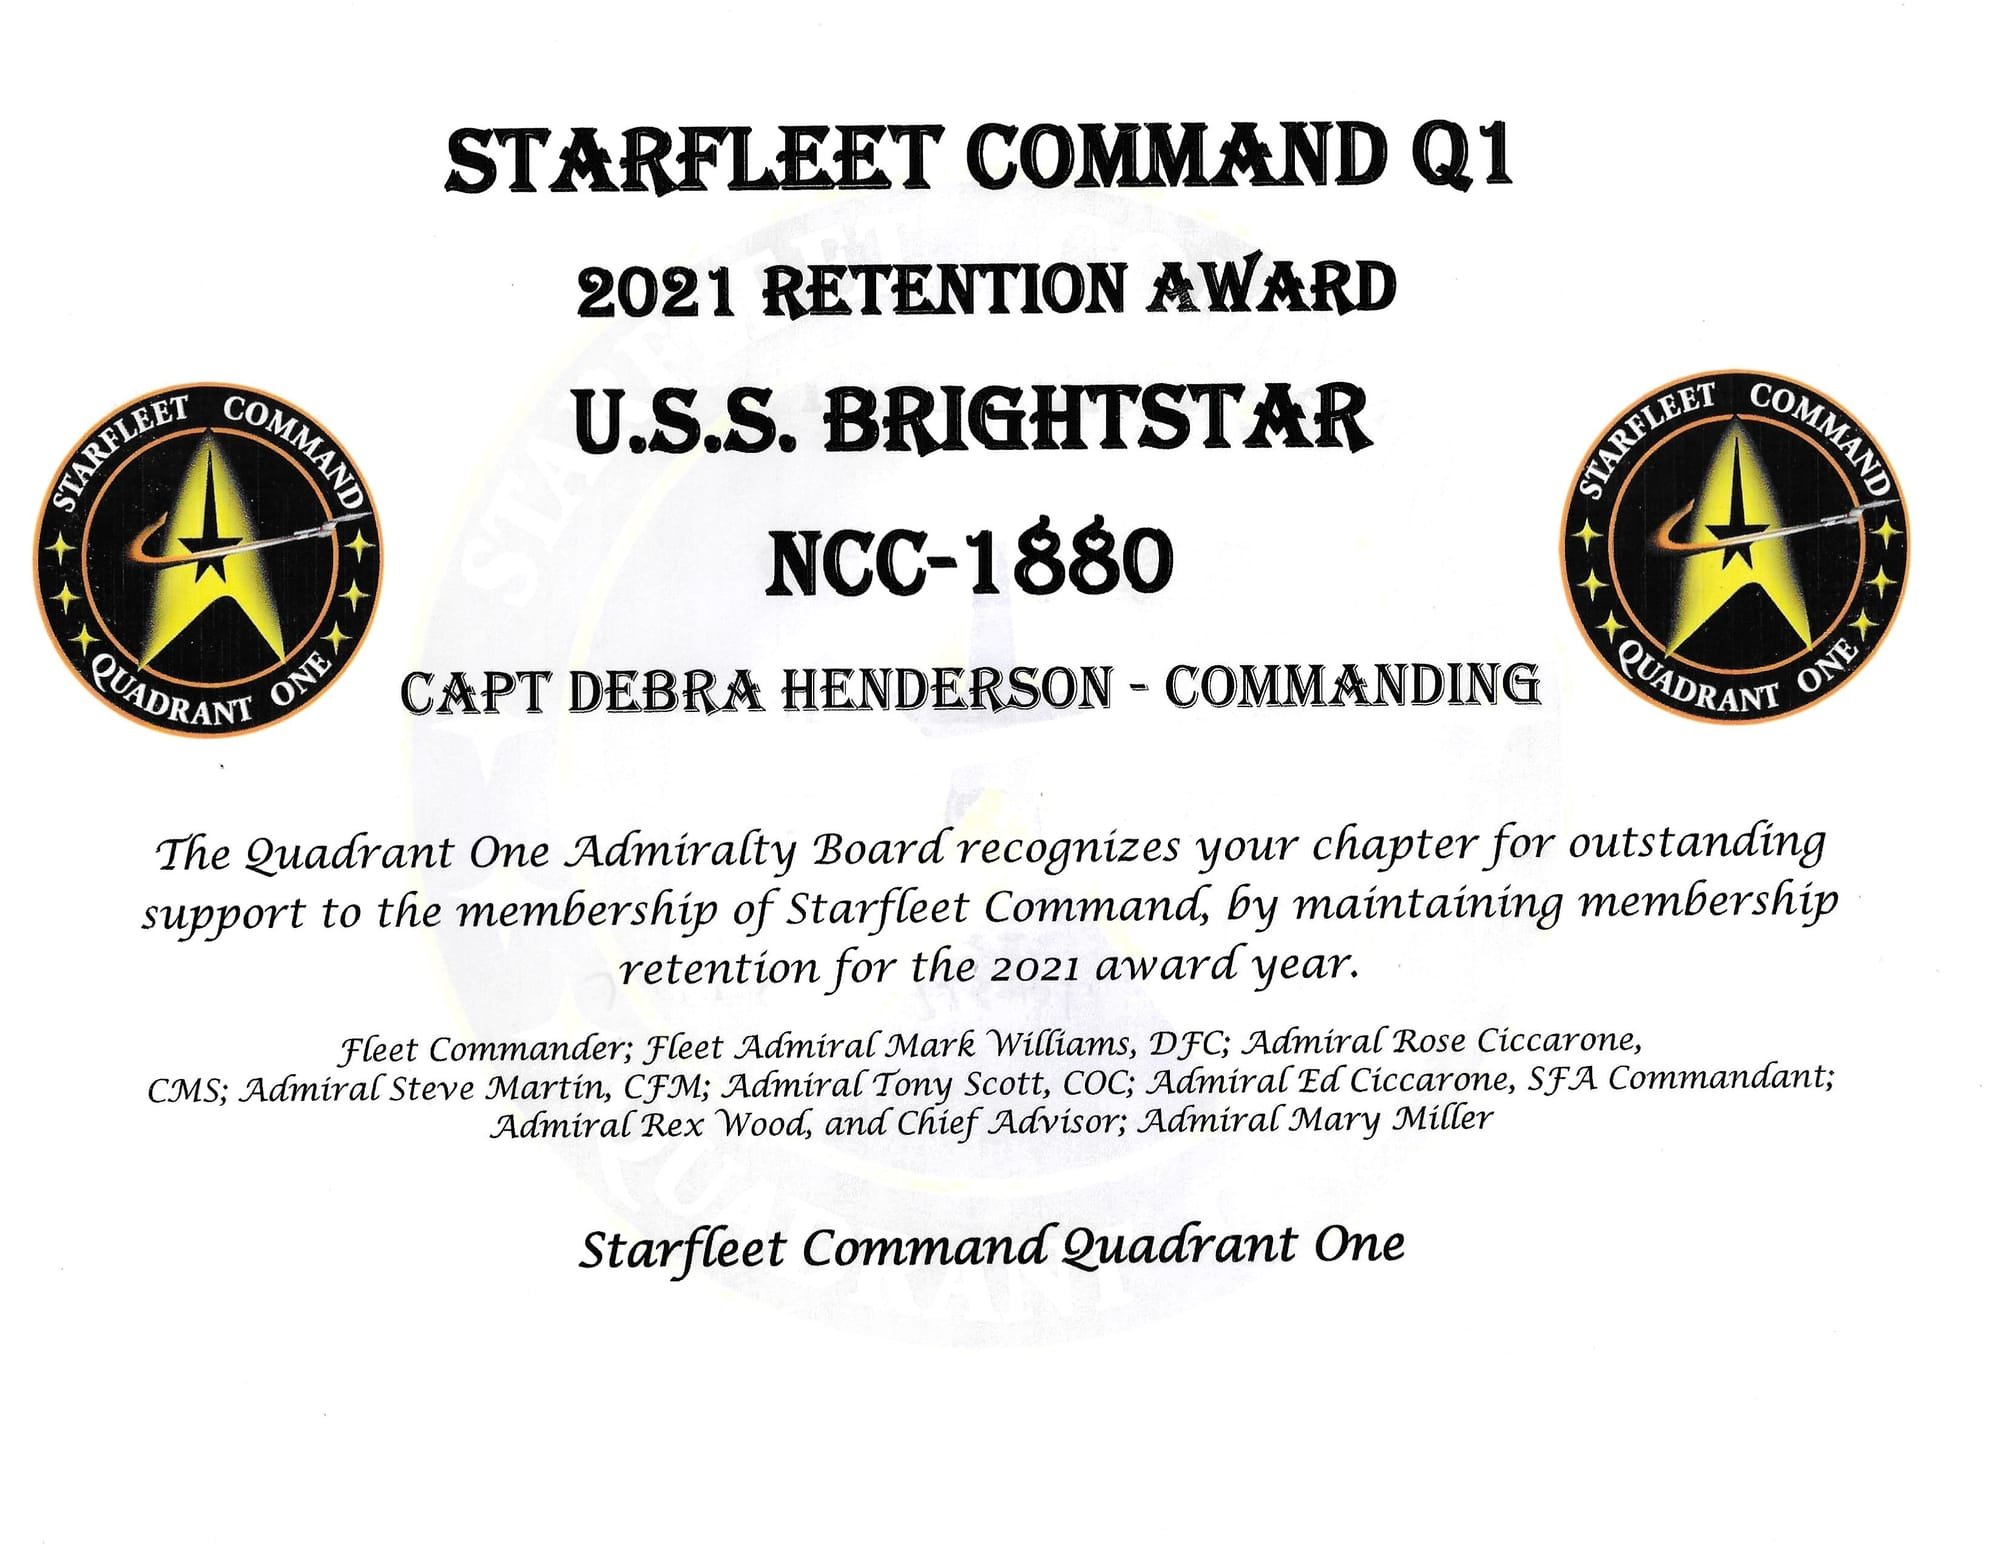 'Retention Award' (STARFLEET COMMAND AWARD) 2021